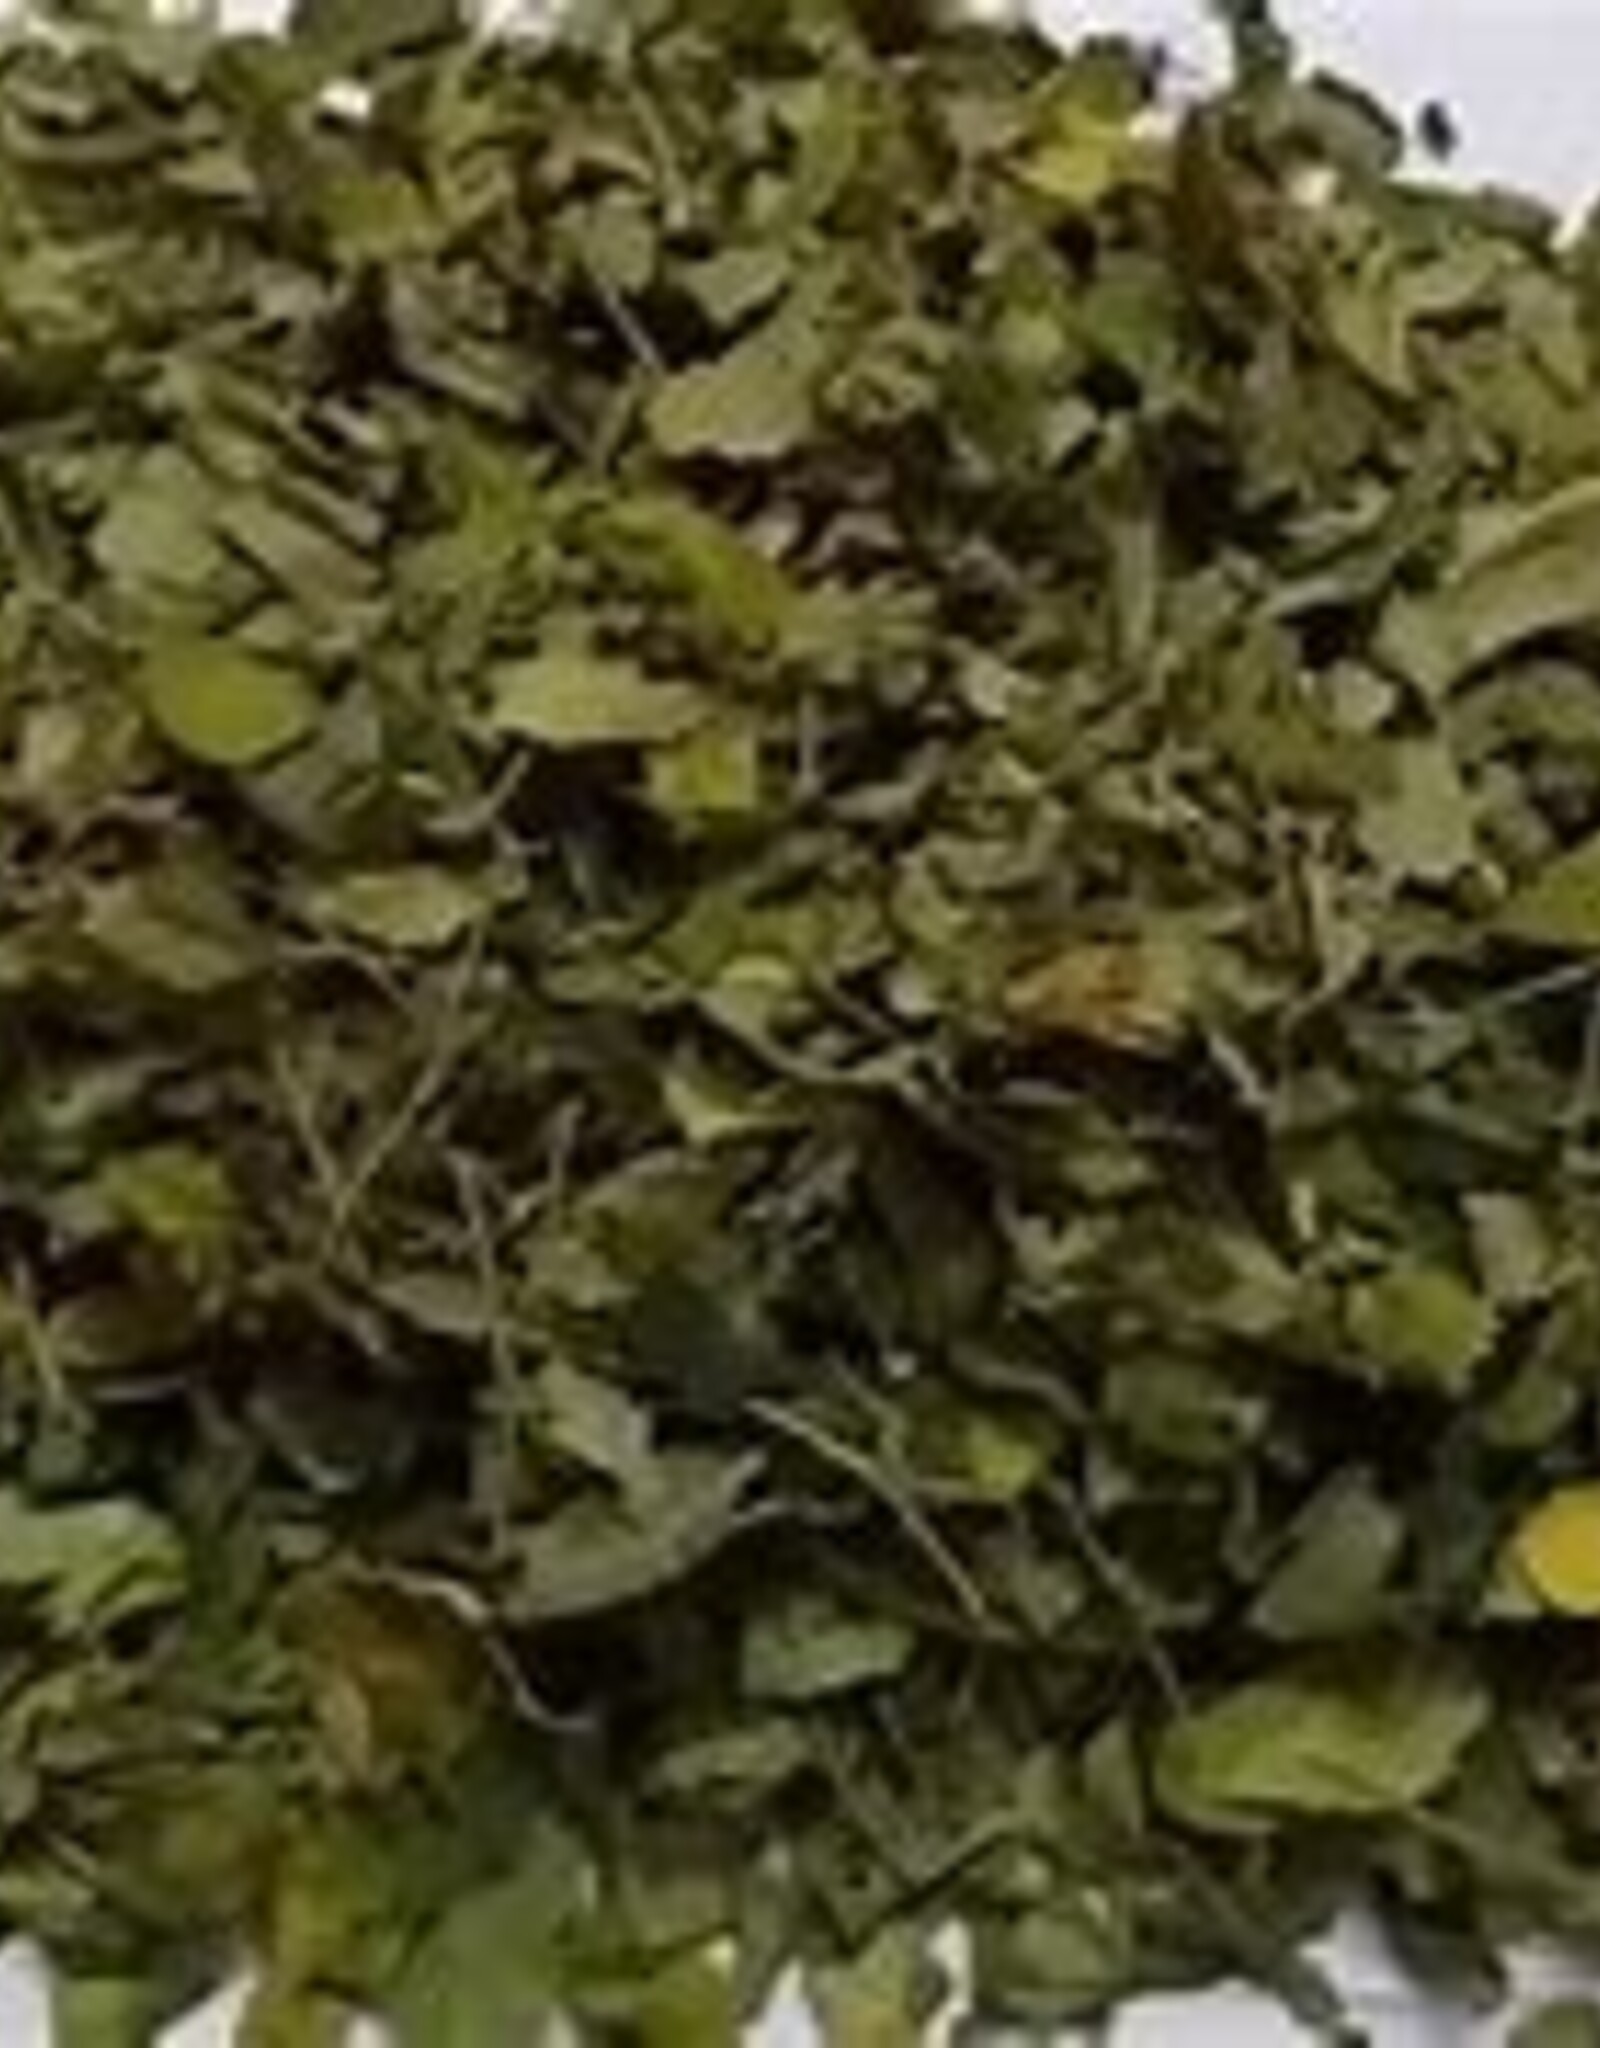 Moringa Leaf 1 oz